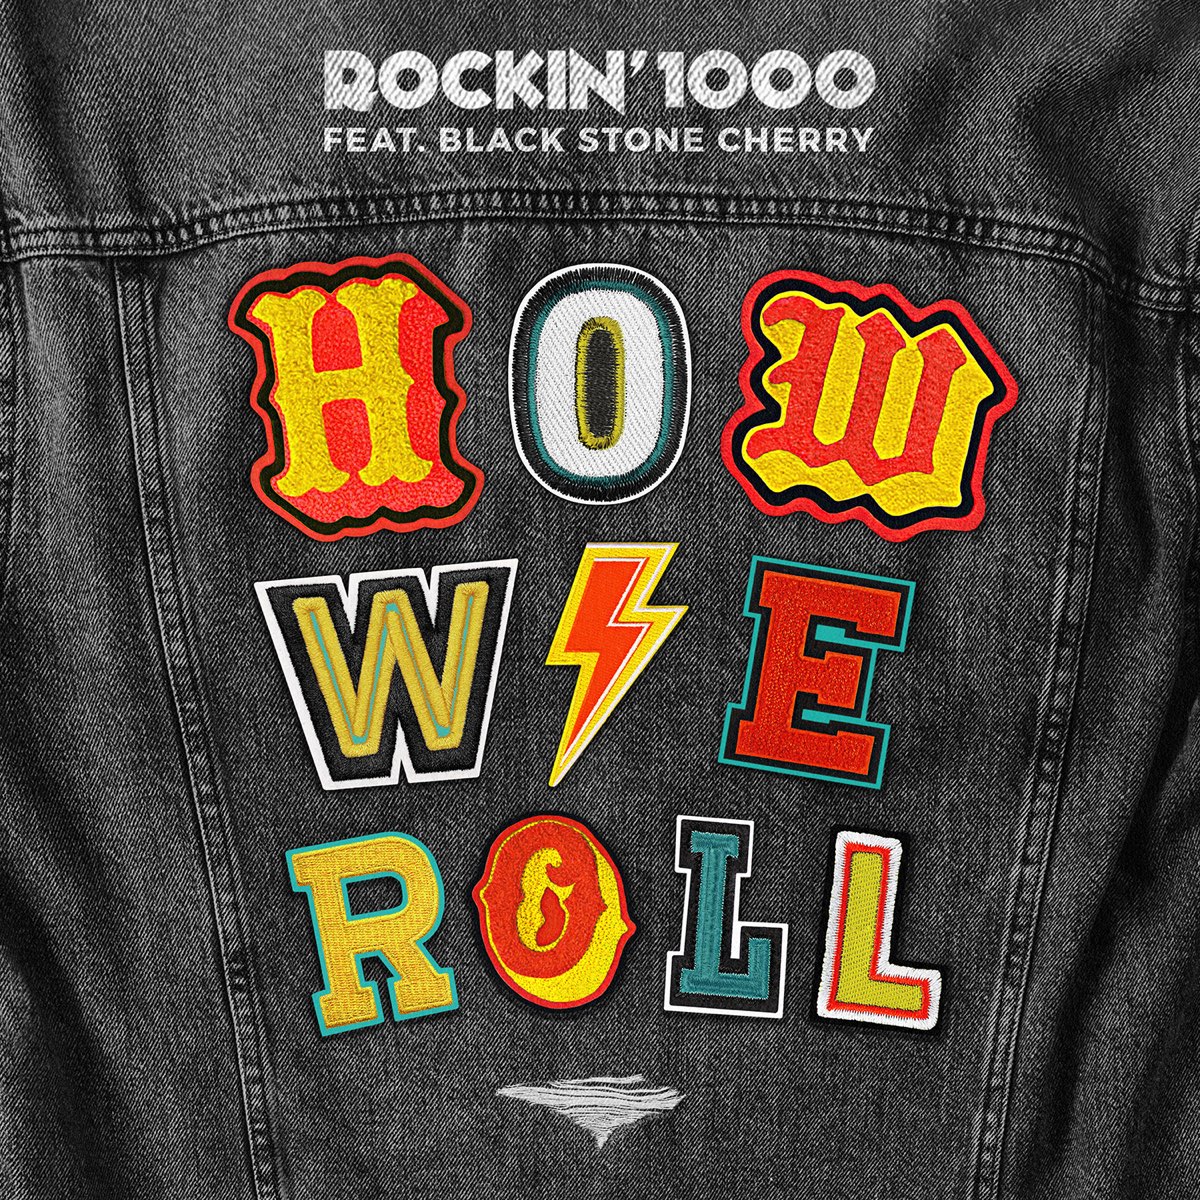 How We Roll (feat. Black Stone Cherry) - Single - Album by Rockin'1000 -  Apple Music